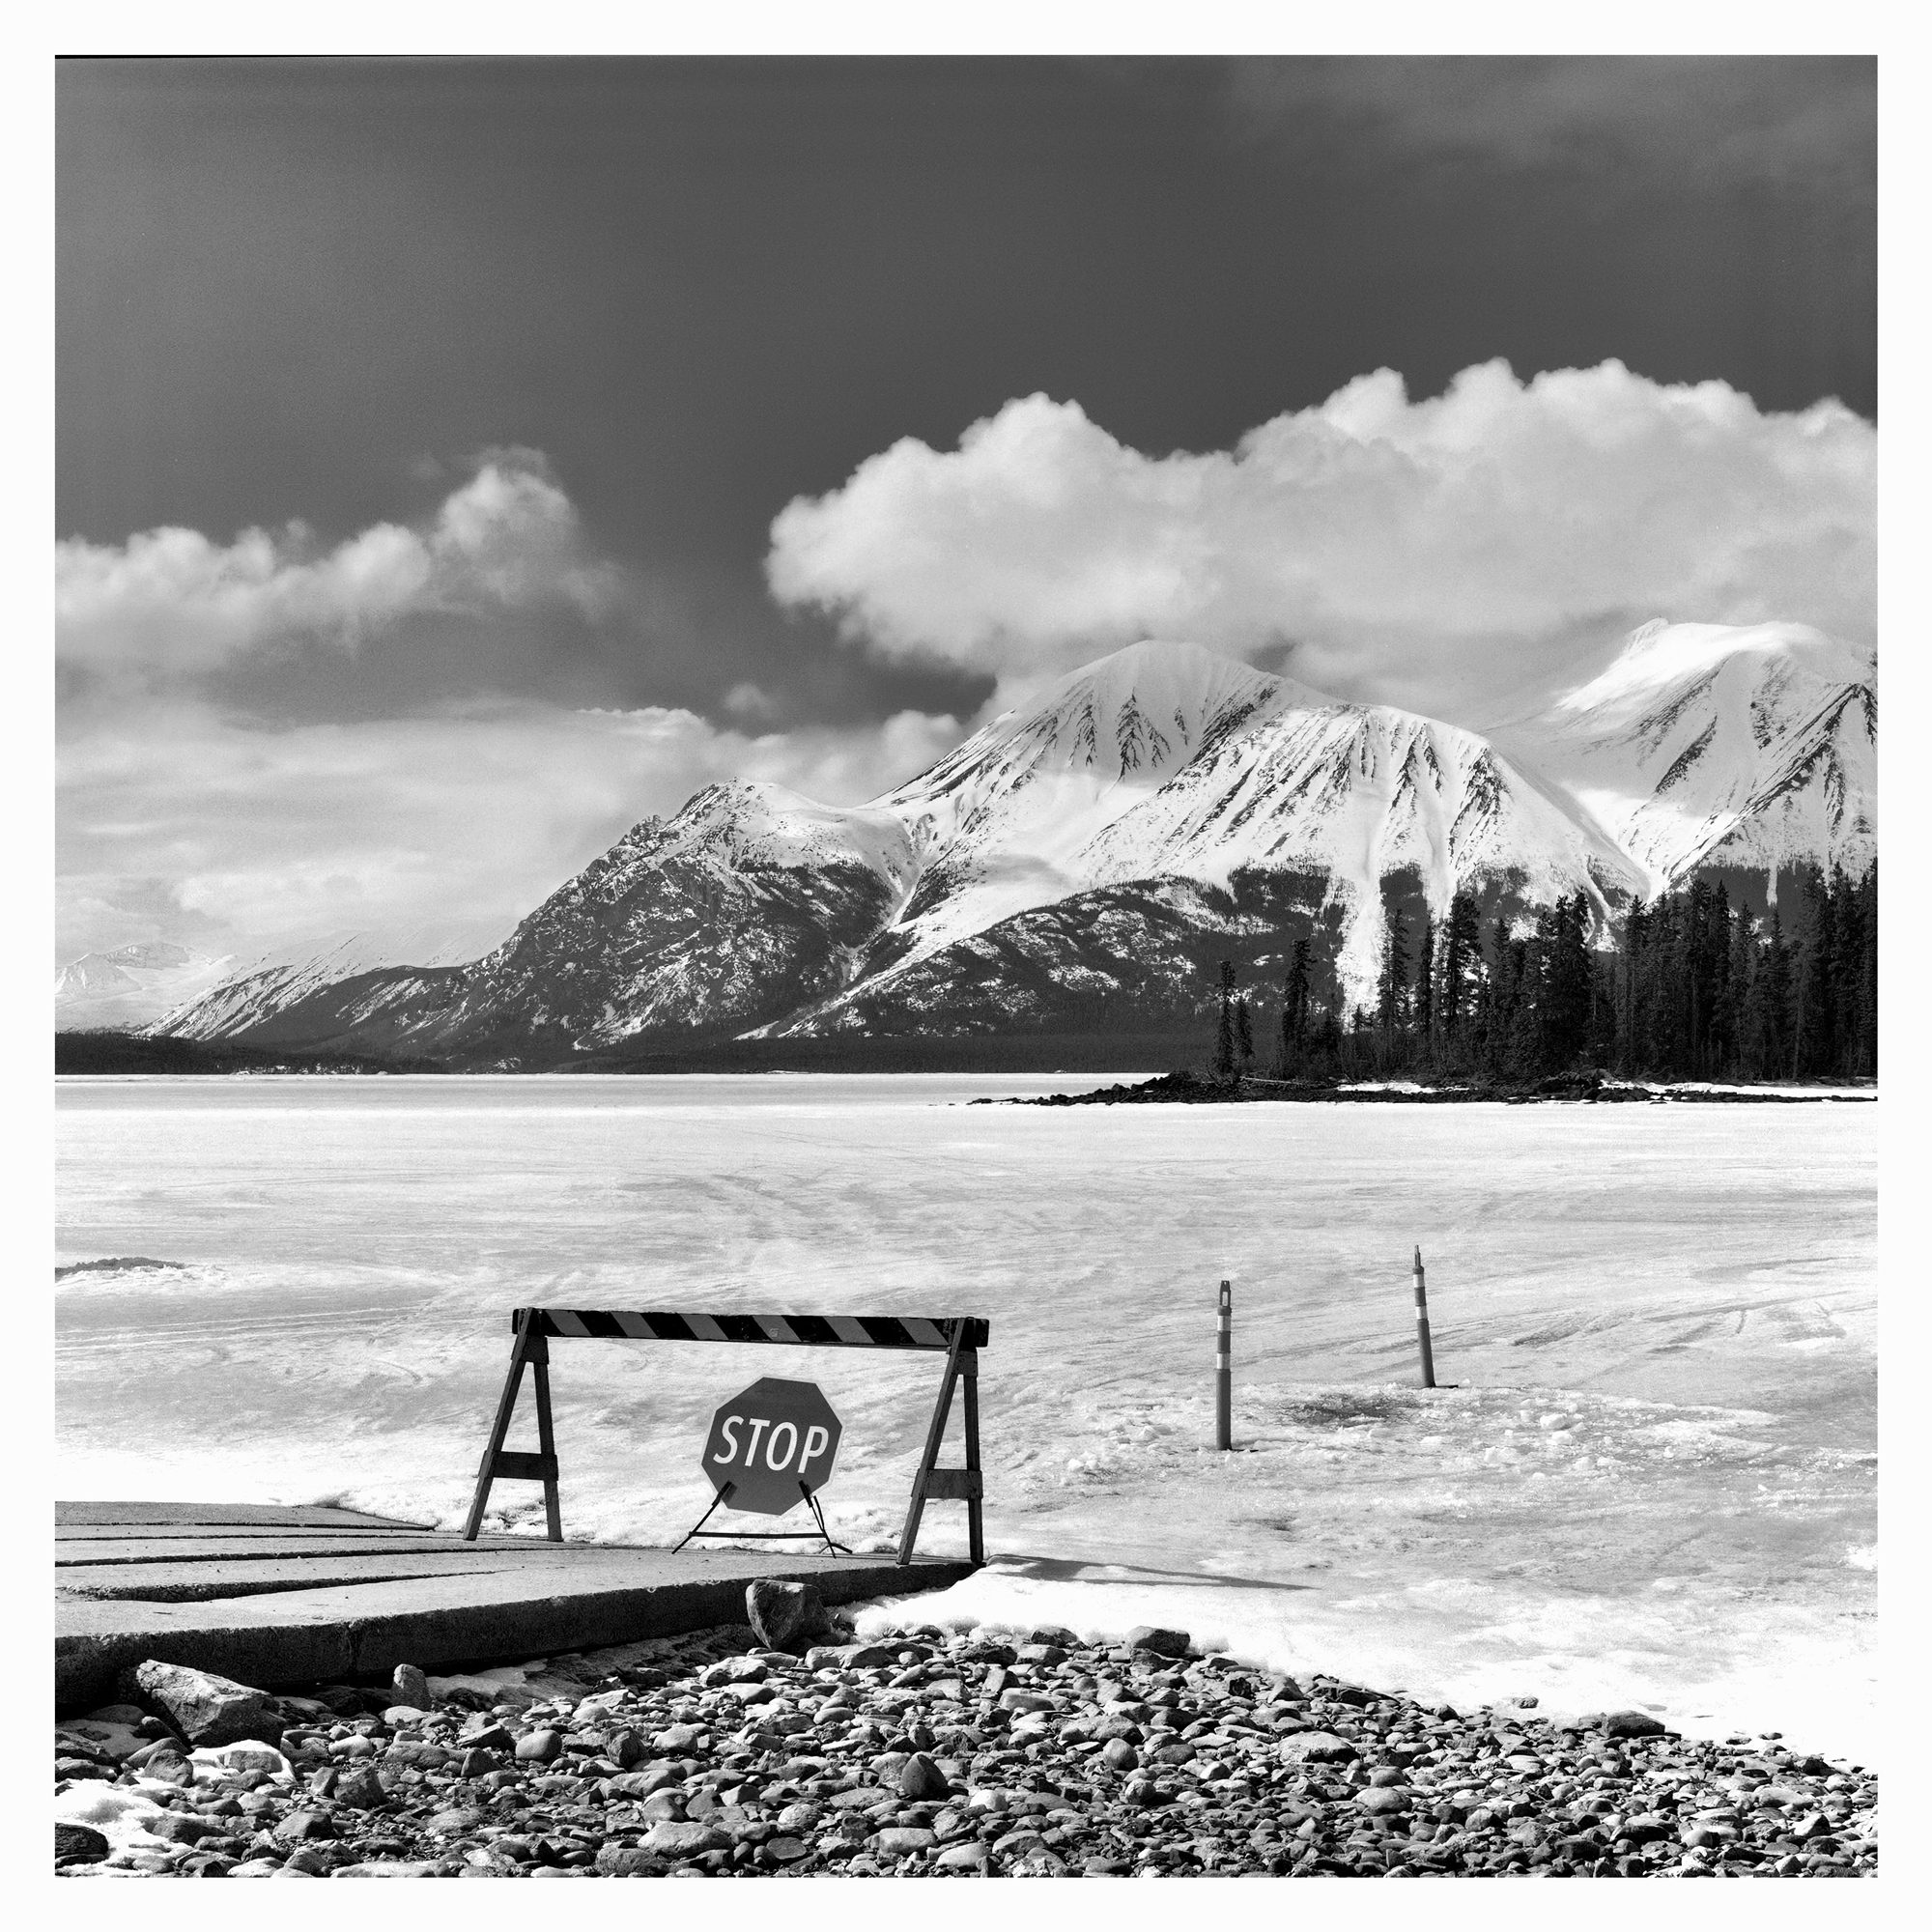 @peter_durstAtlin Lake Hasselblad 500CM Zeiss Sonnar 150mm f4 @ilfordphoto Pan F Atlin, British Columbia 🇨🇦 #believeinfilm #filmphotography #ilfordphoto #fridayfavourites #shotwithpanf